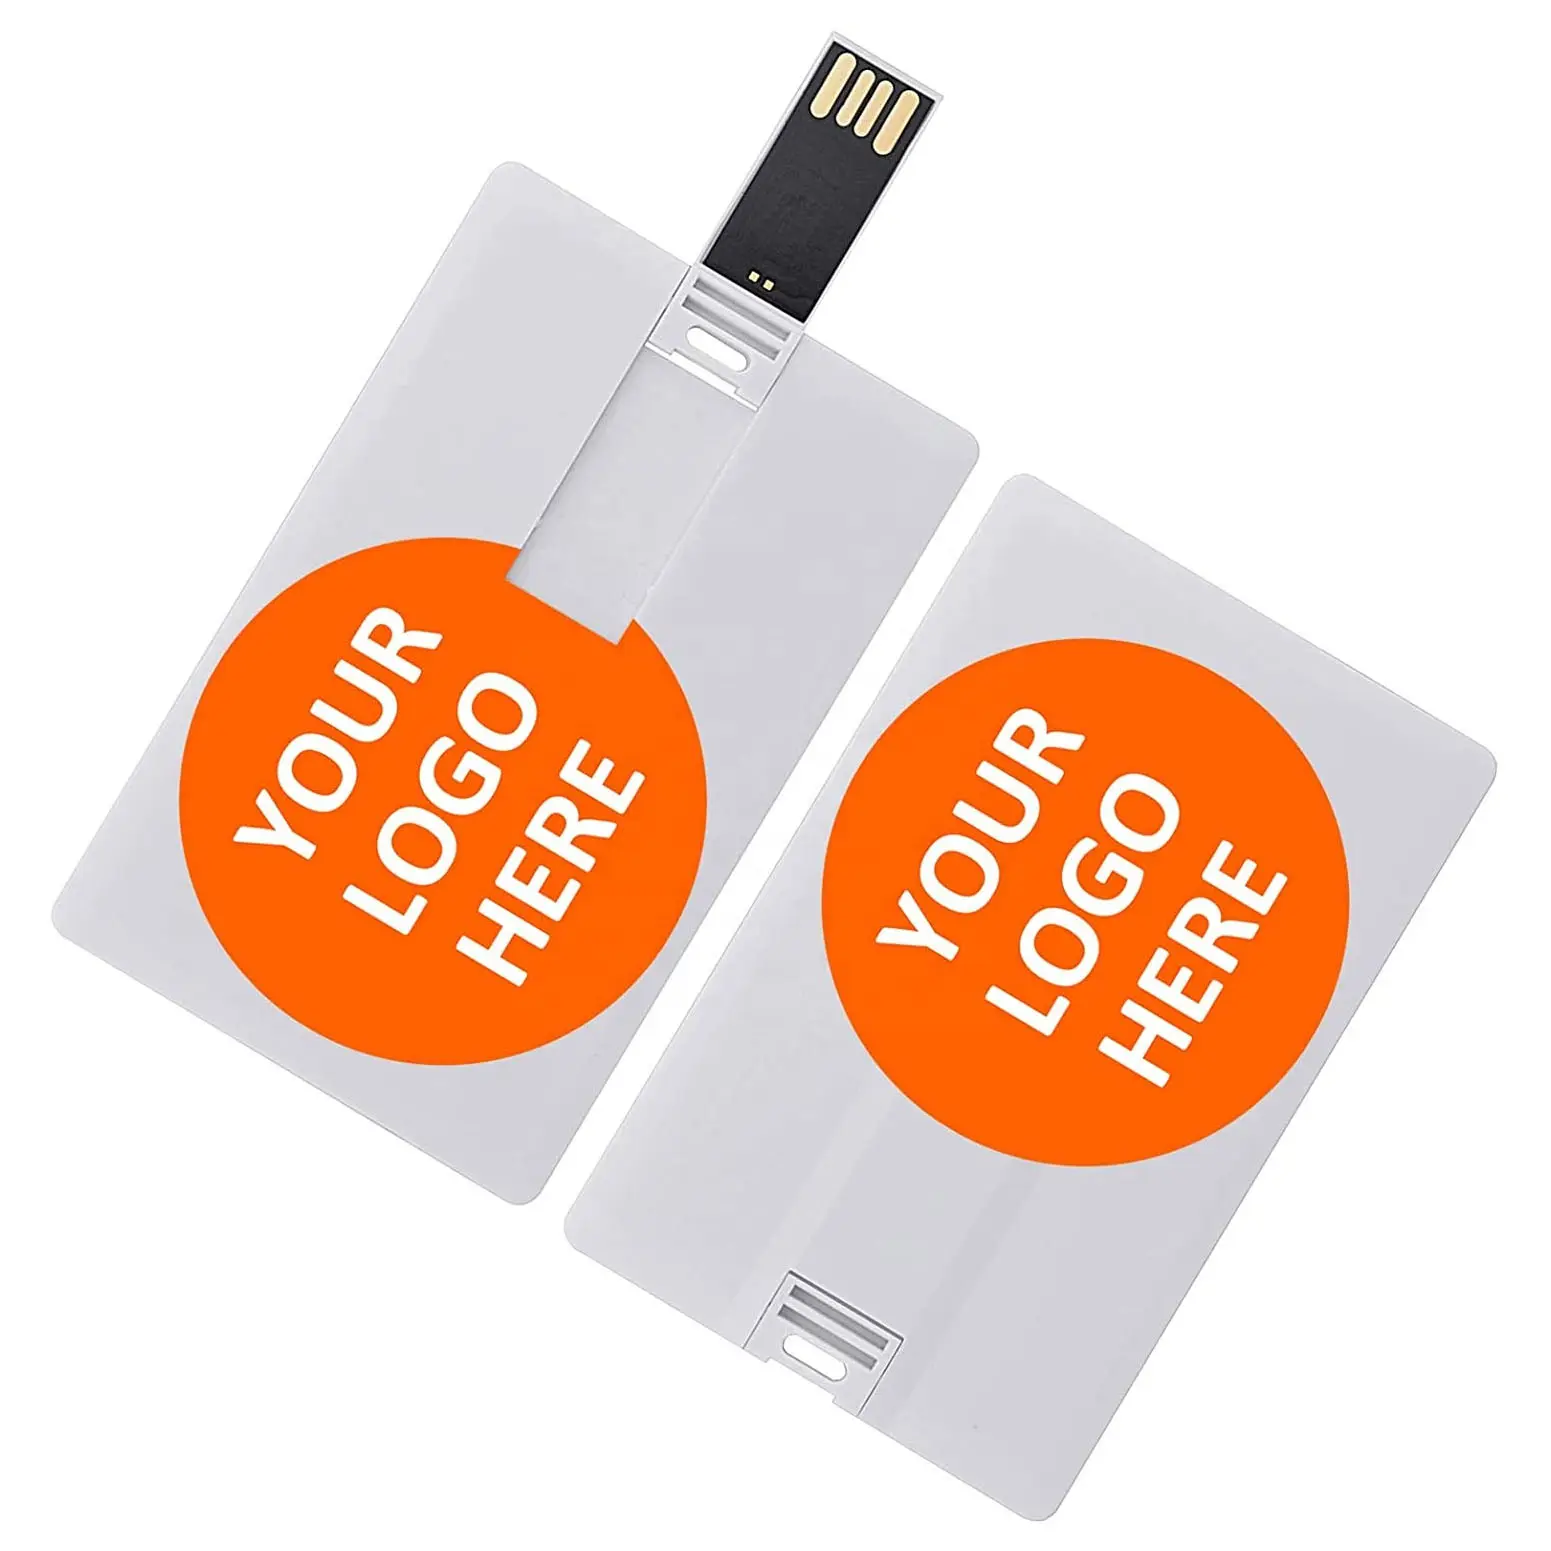 Cartão de crédito USB 2.0 3.0 pendrive 1GB 2GB 4GB 8GB 16GB 32GB 64GB 128GB memórias cle memory stick Business Card usb flash drive